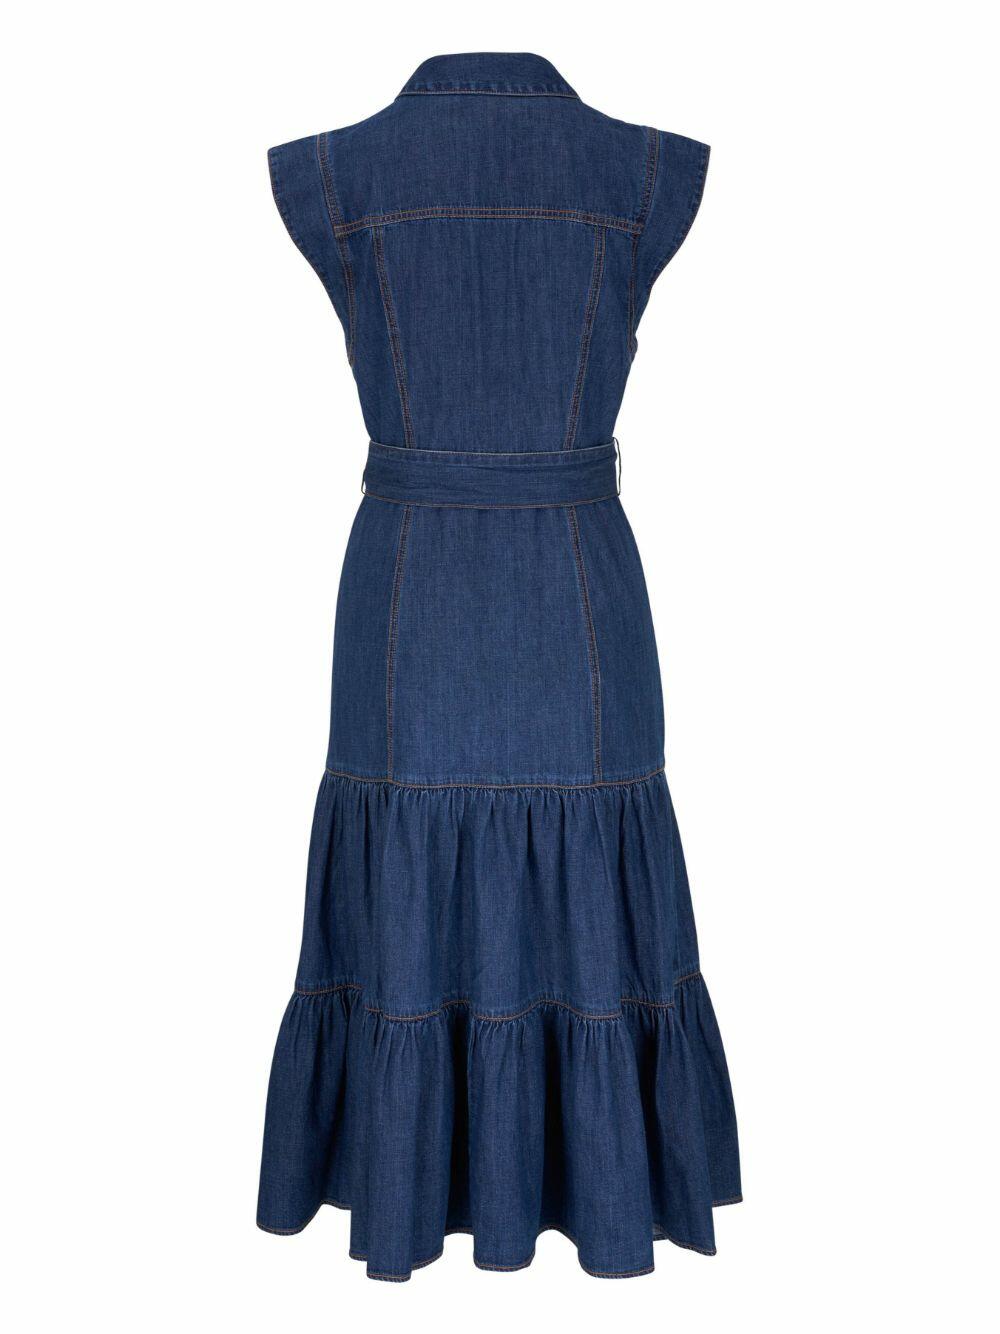 Veronica Beard - Arnetta Cornflower Blue Denim Dress